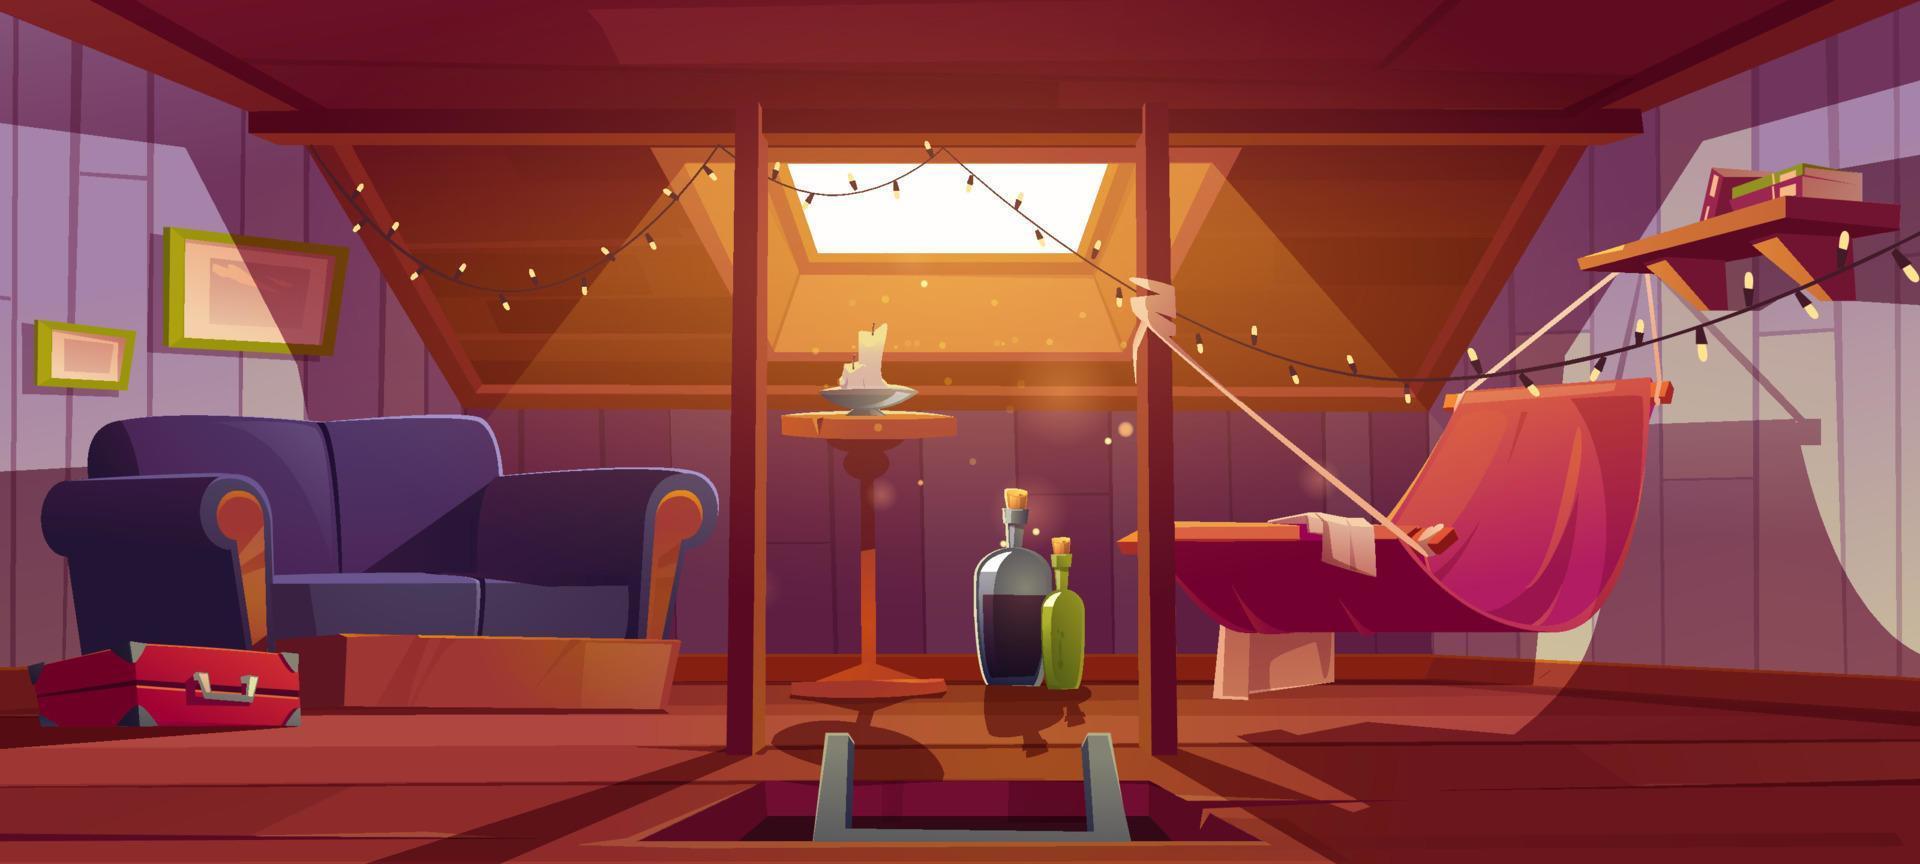 Cozy room on attic with hammock, sofa and window vector